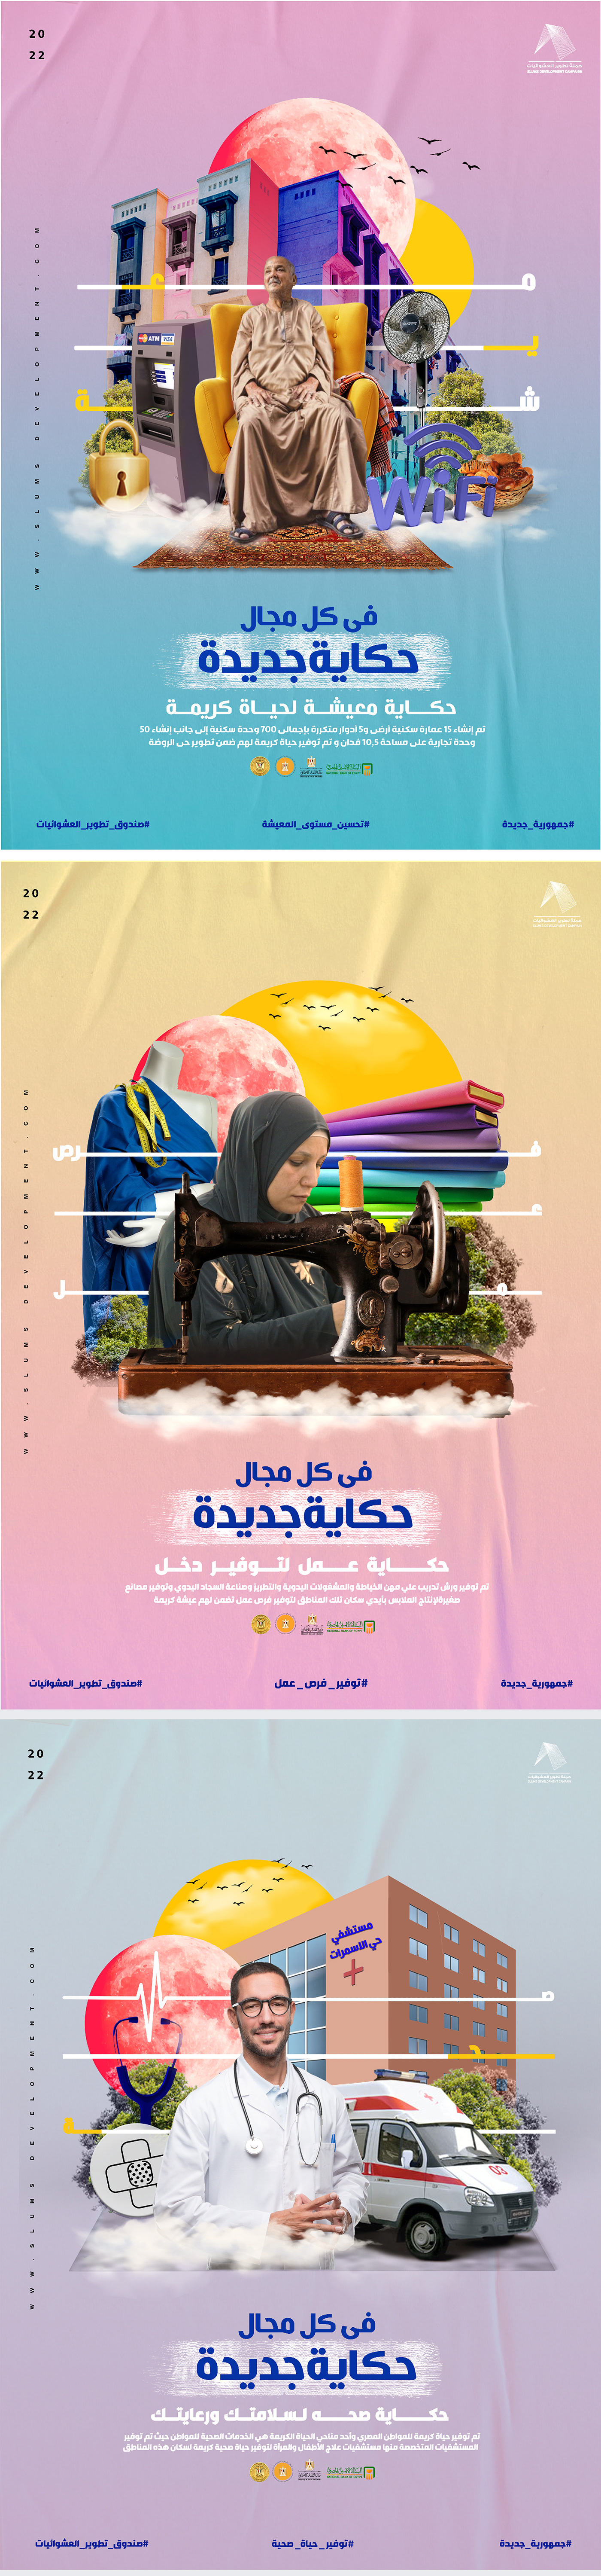 building campaign Developing development egypt Logo Design slums تطوير عشوائيات مصر